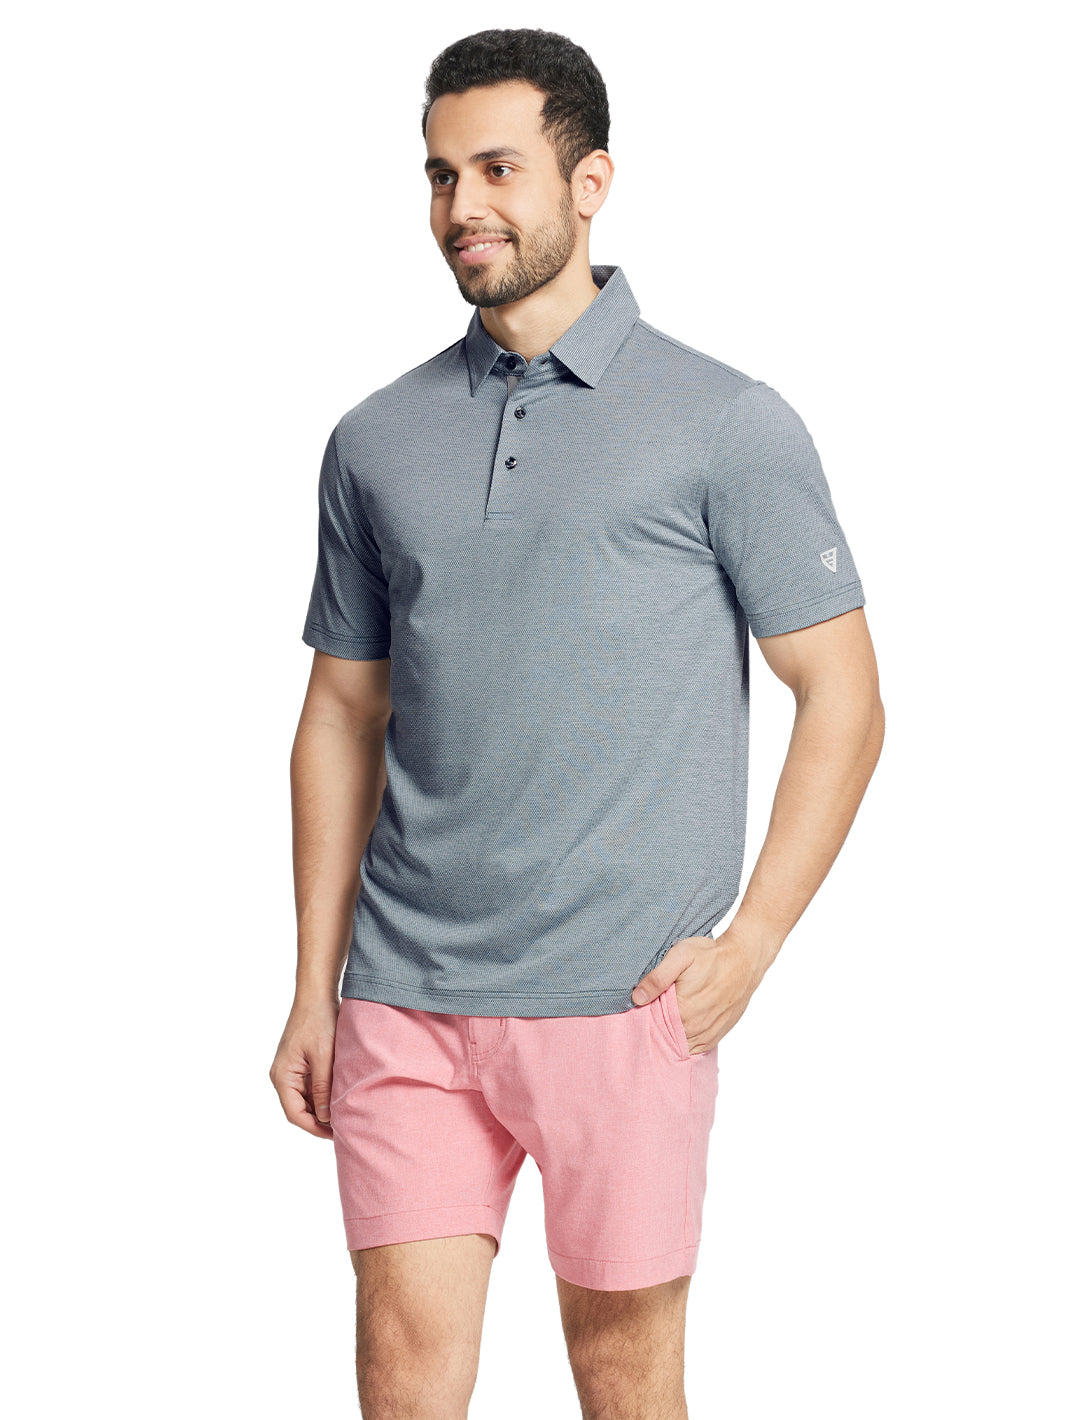 Men's Dry Fit Jacquard Golf Shirts-Slate Green Heather